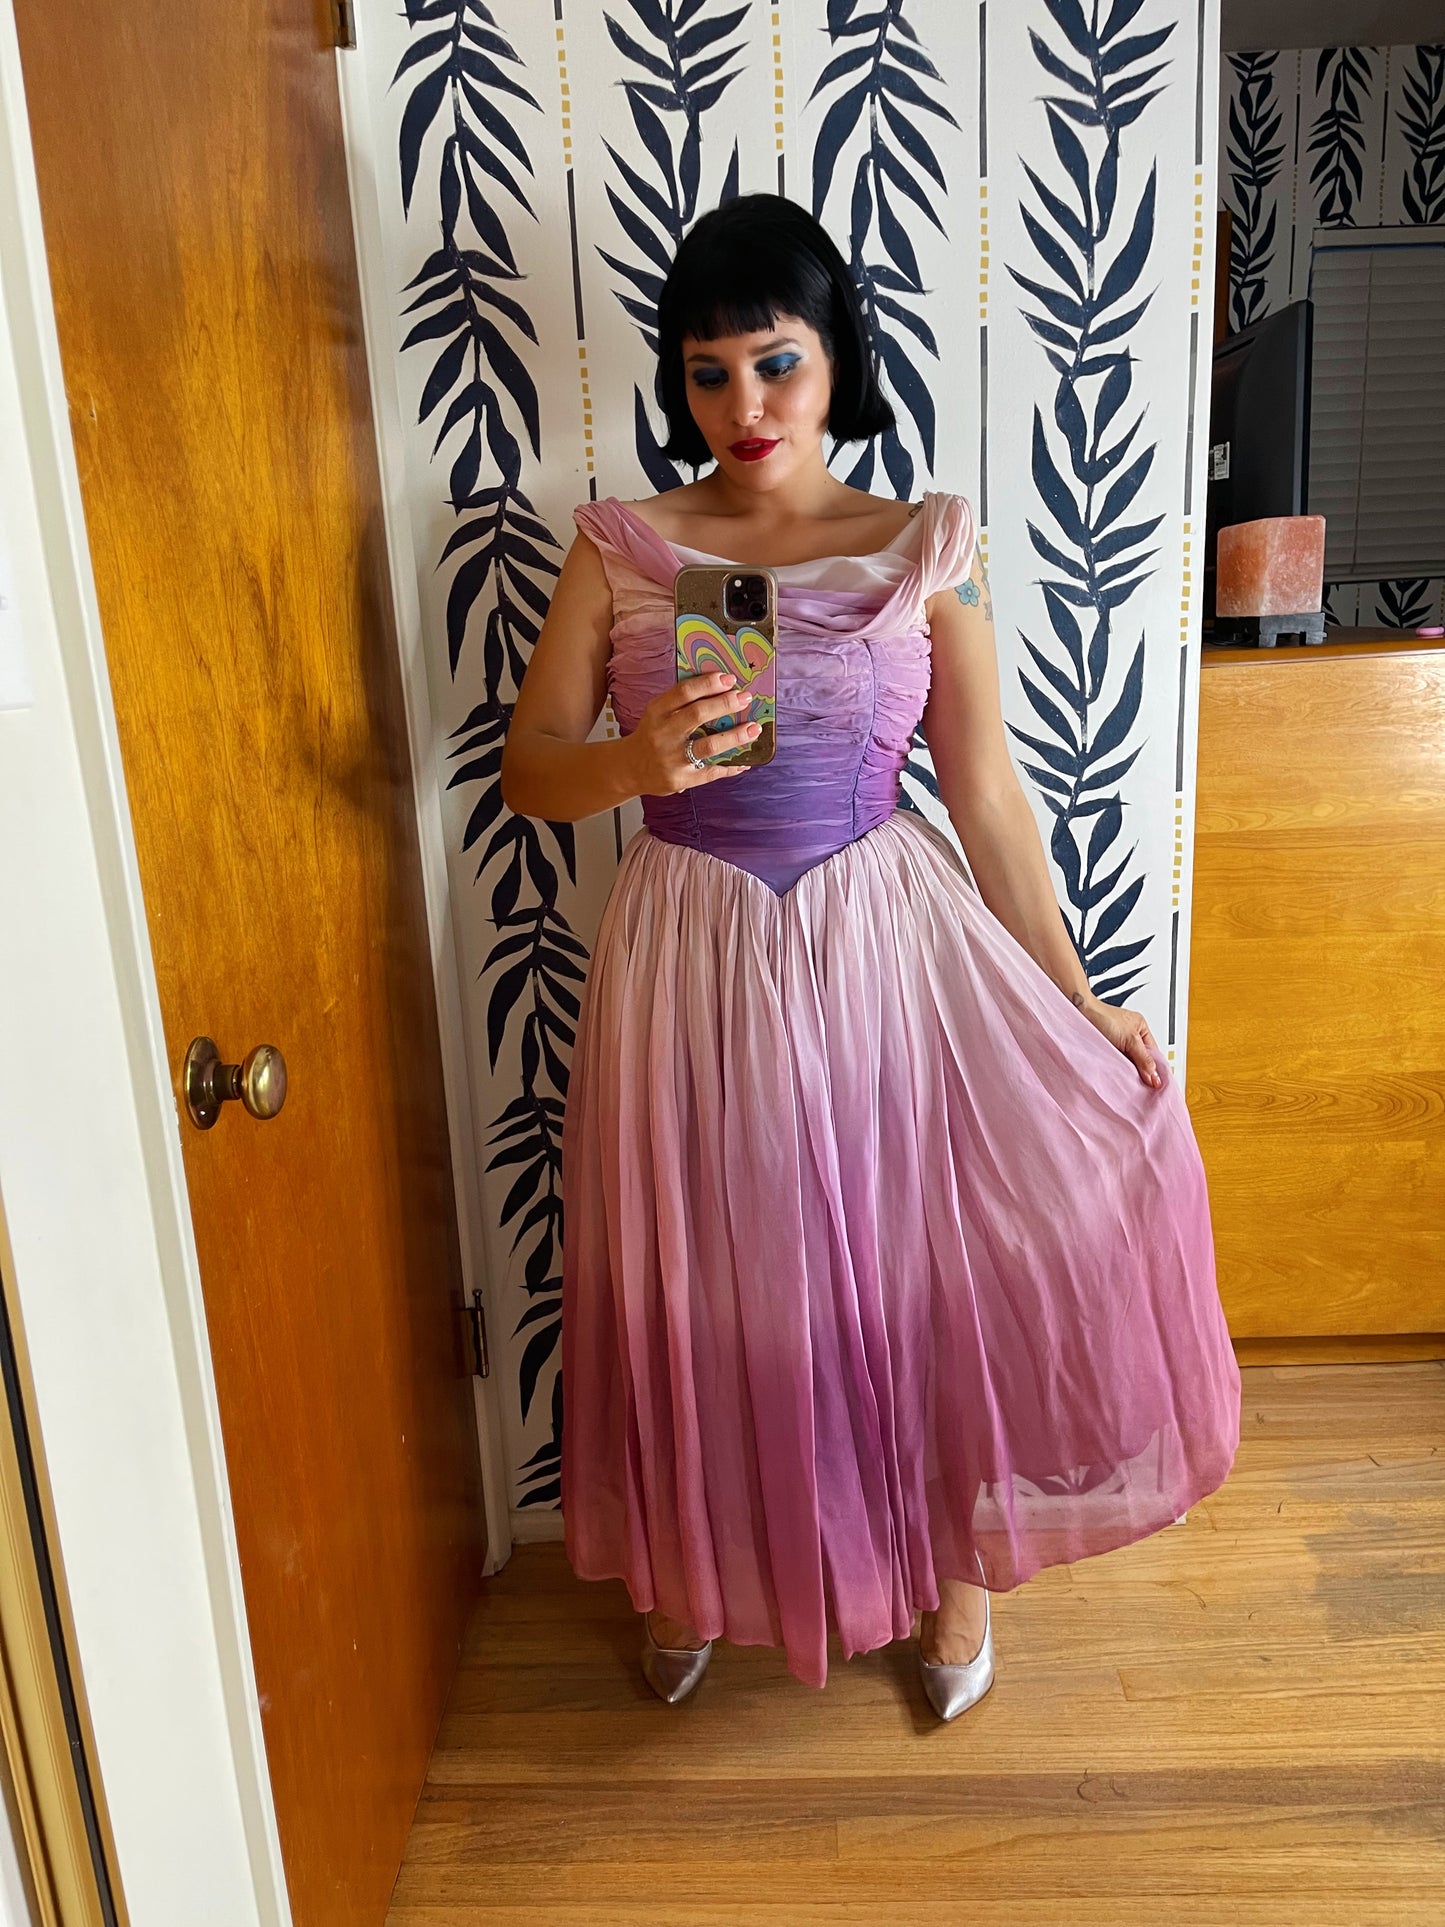 Vintage 50s Ombre Chiffon Purple Dress Fits Sizes XS-S